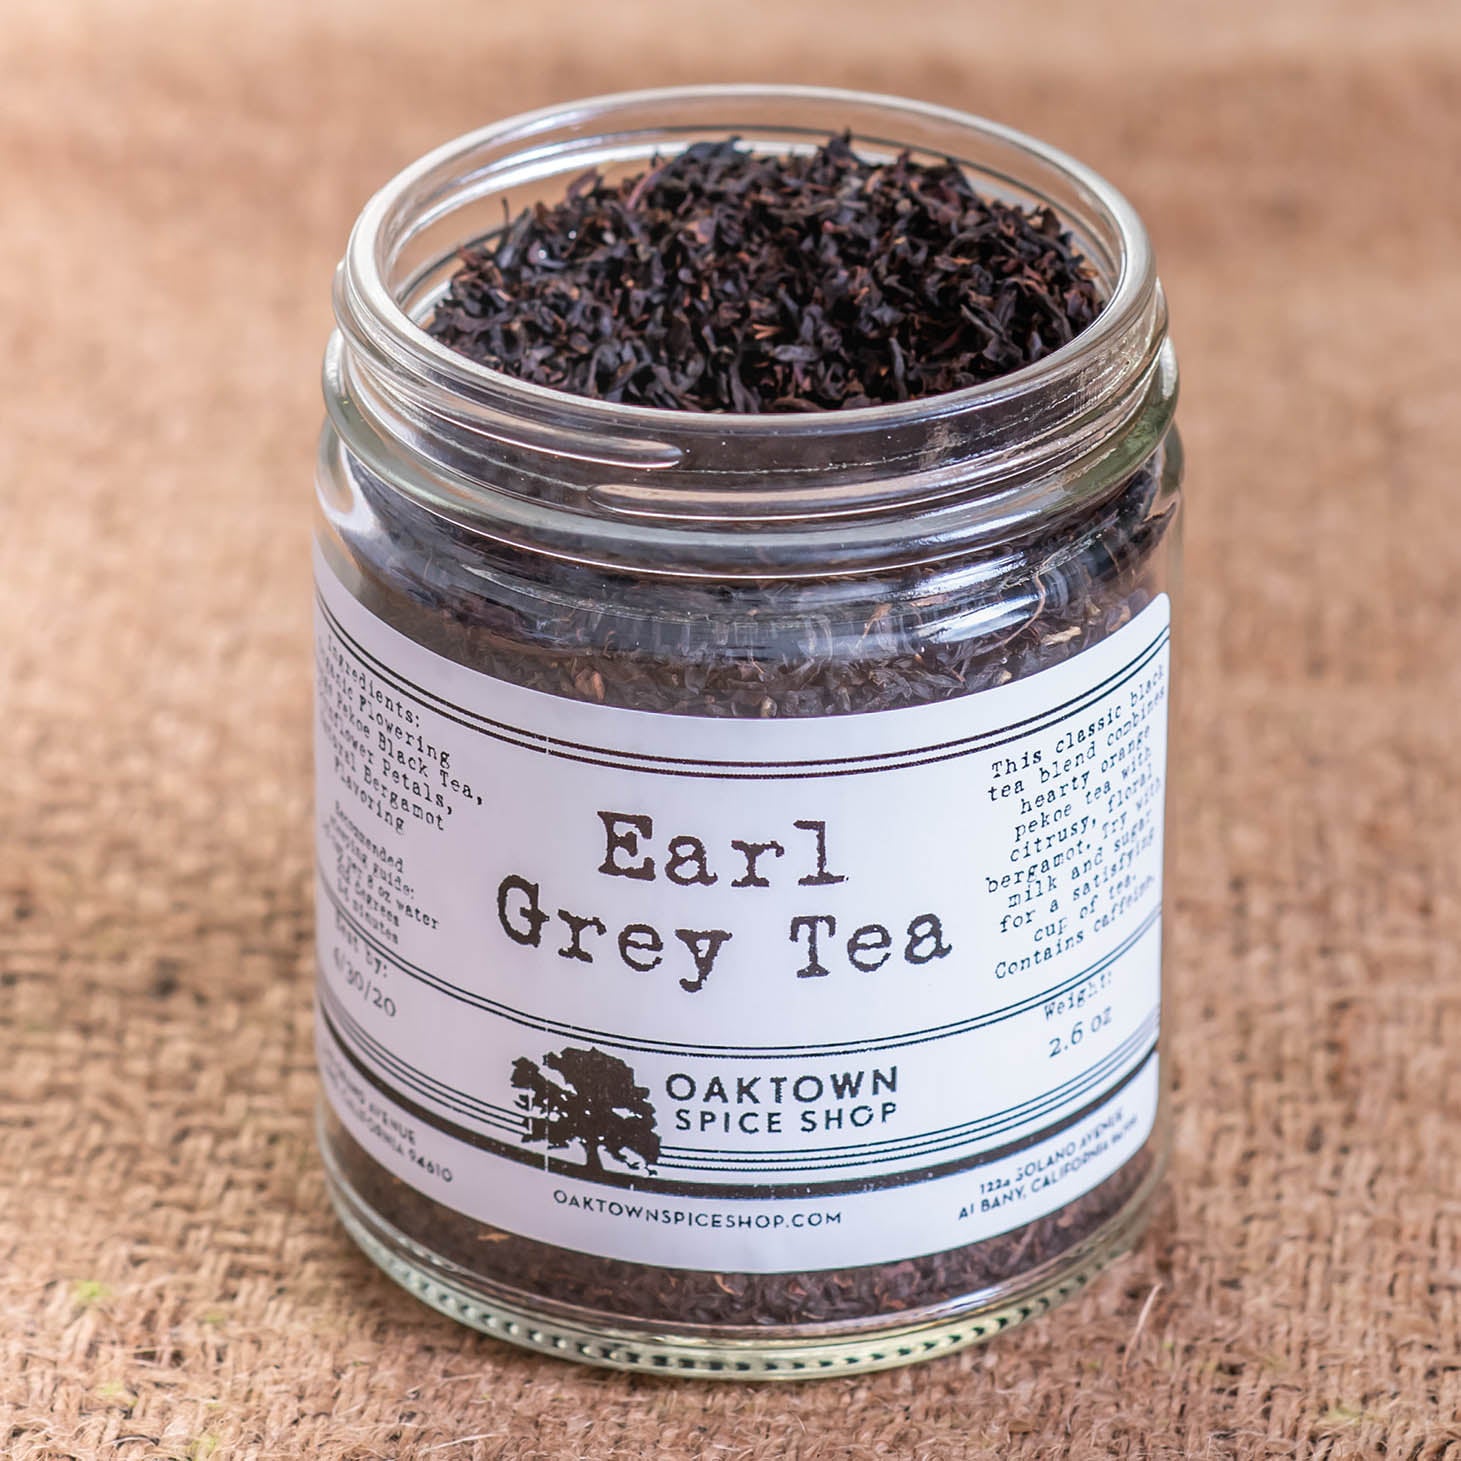 Earl Grey Tea by Oaktown Spice Shop is a classic black tea blend combines hearty Orange Pekoe Tea with citrusy floral Bergamot